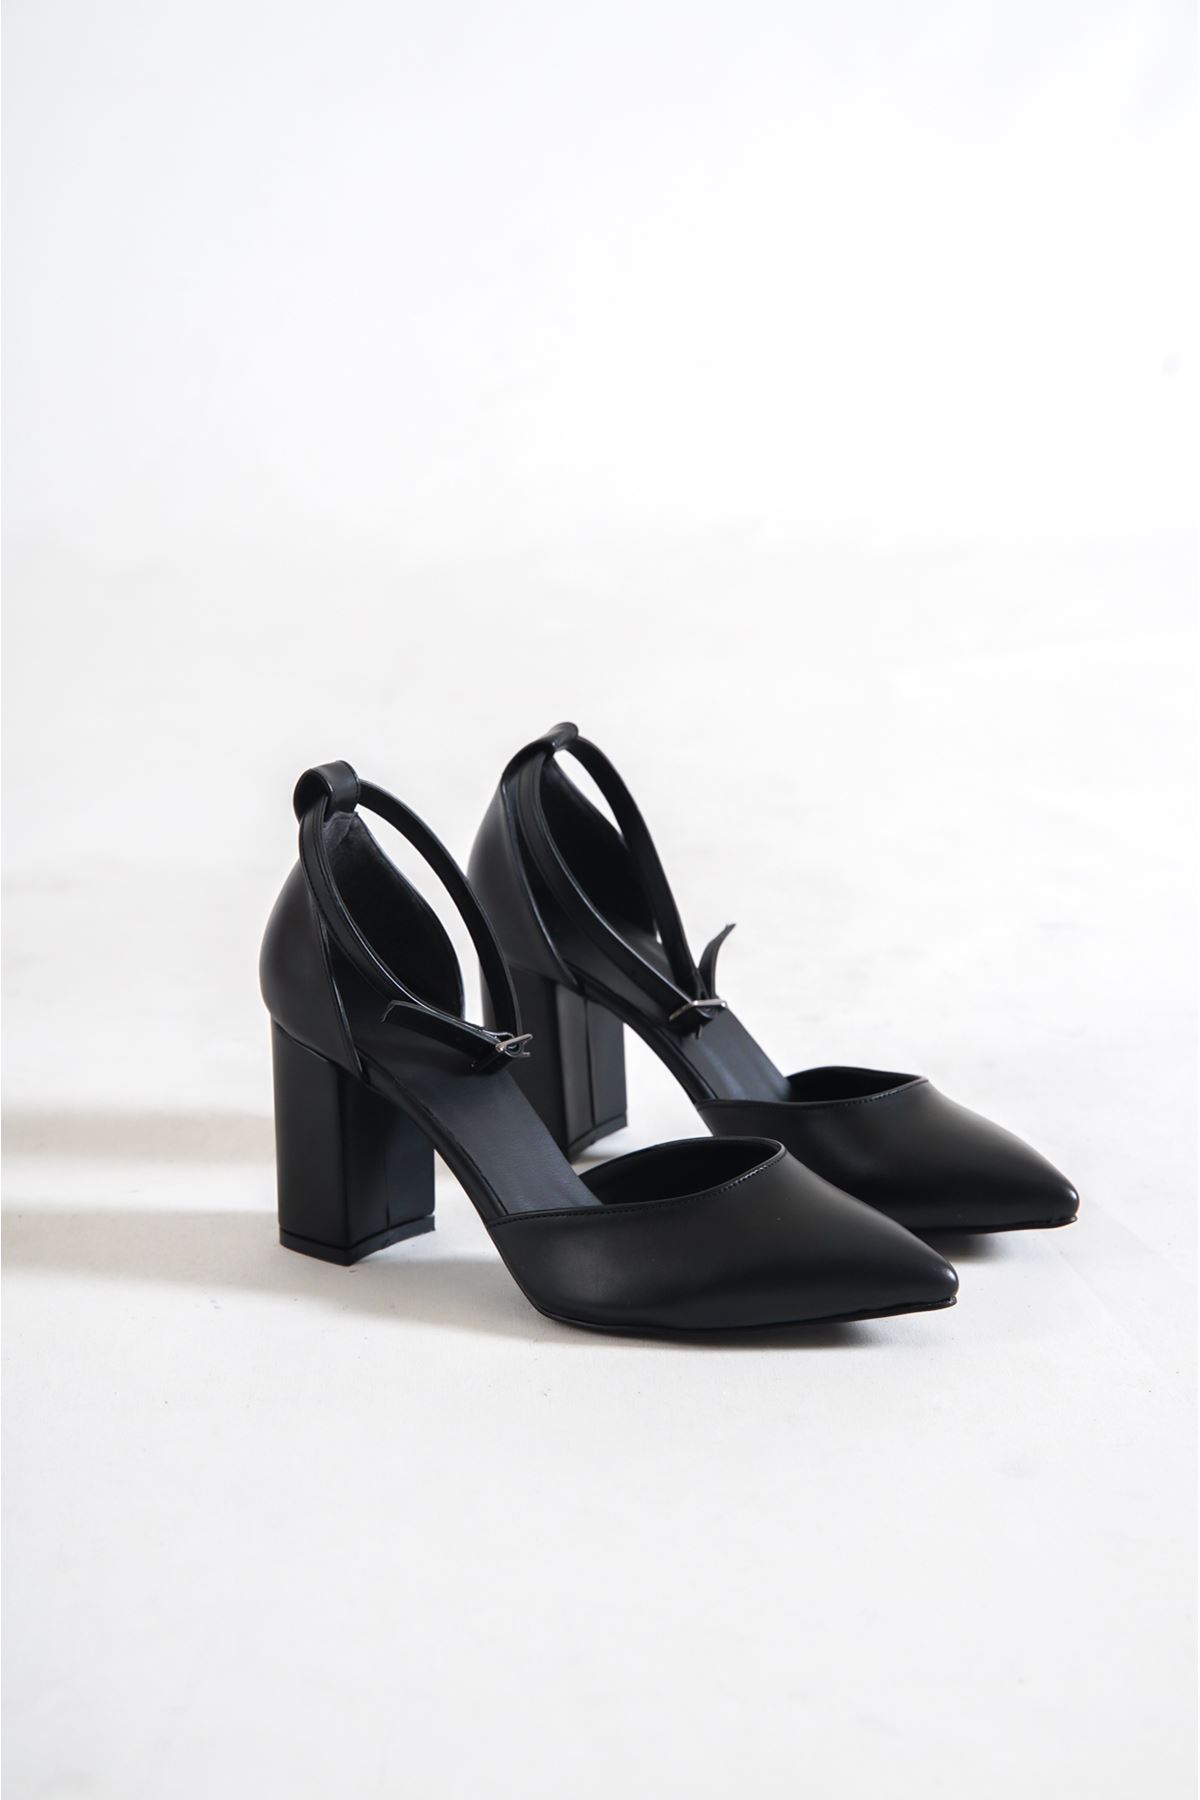 Focus Siyah Cilt Kısa Topuklu Kadın Ayakkabı